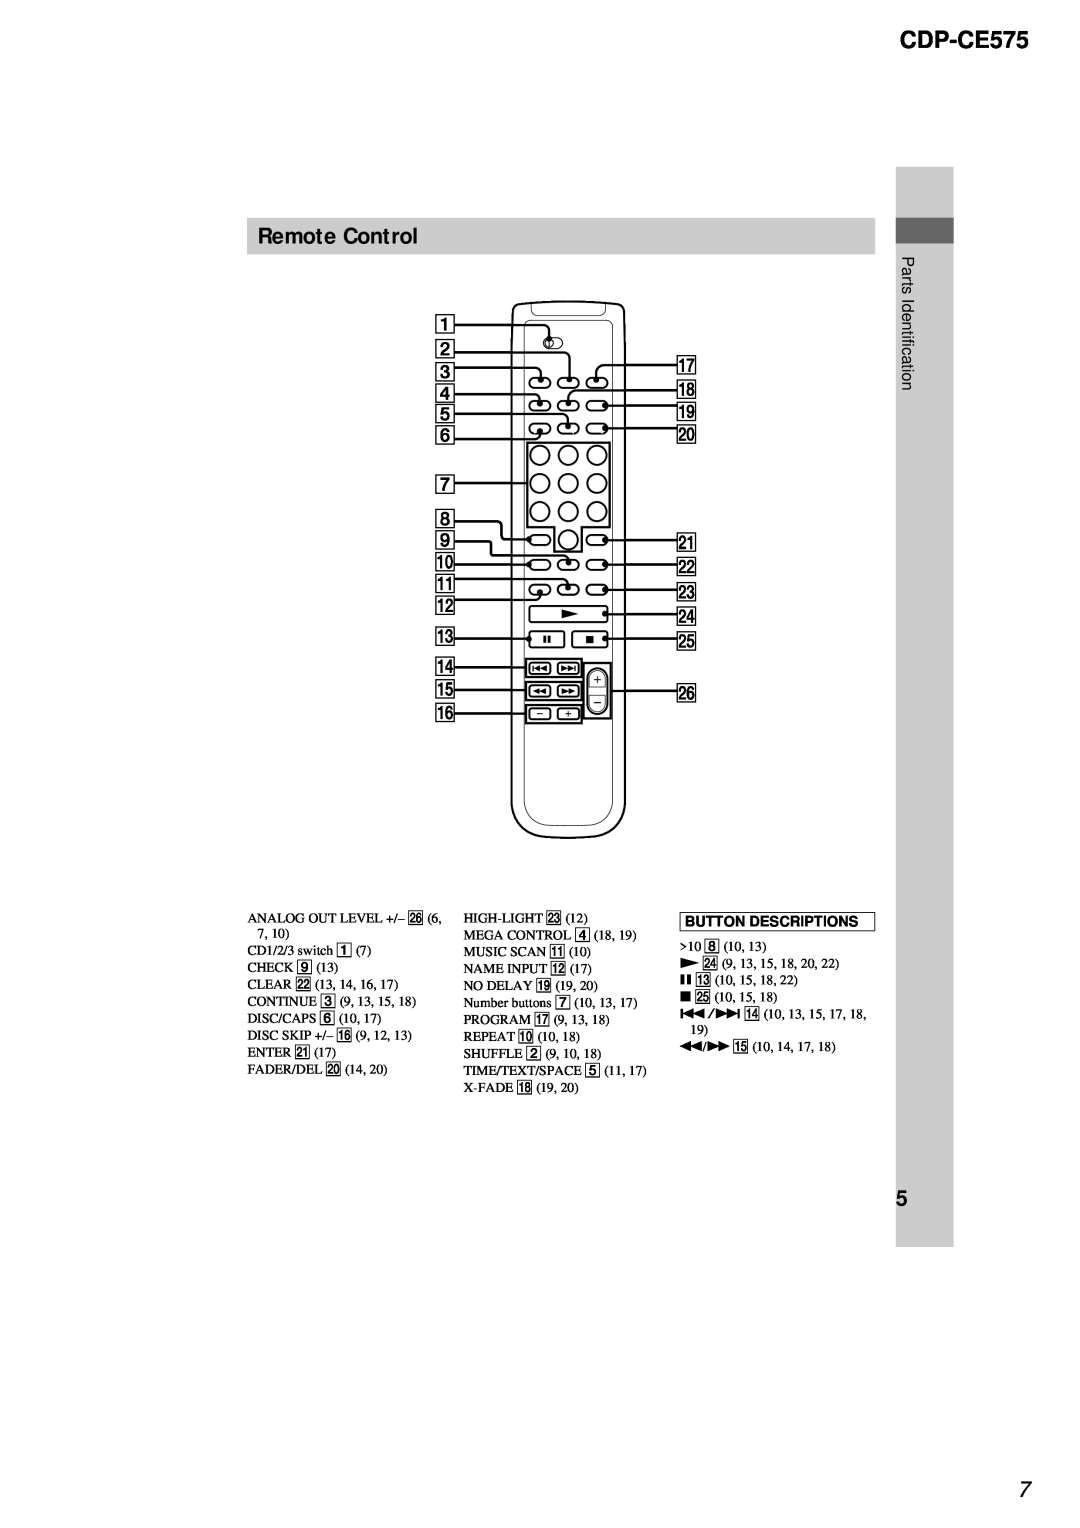 Sony CDP-CE575 service manual Remote Control, Parts Identification, Button Descriptions 